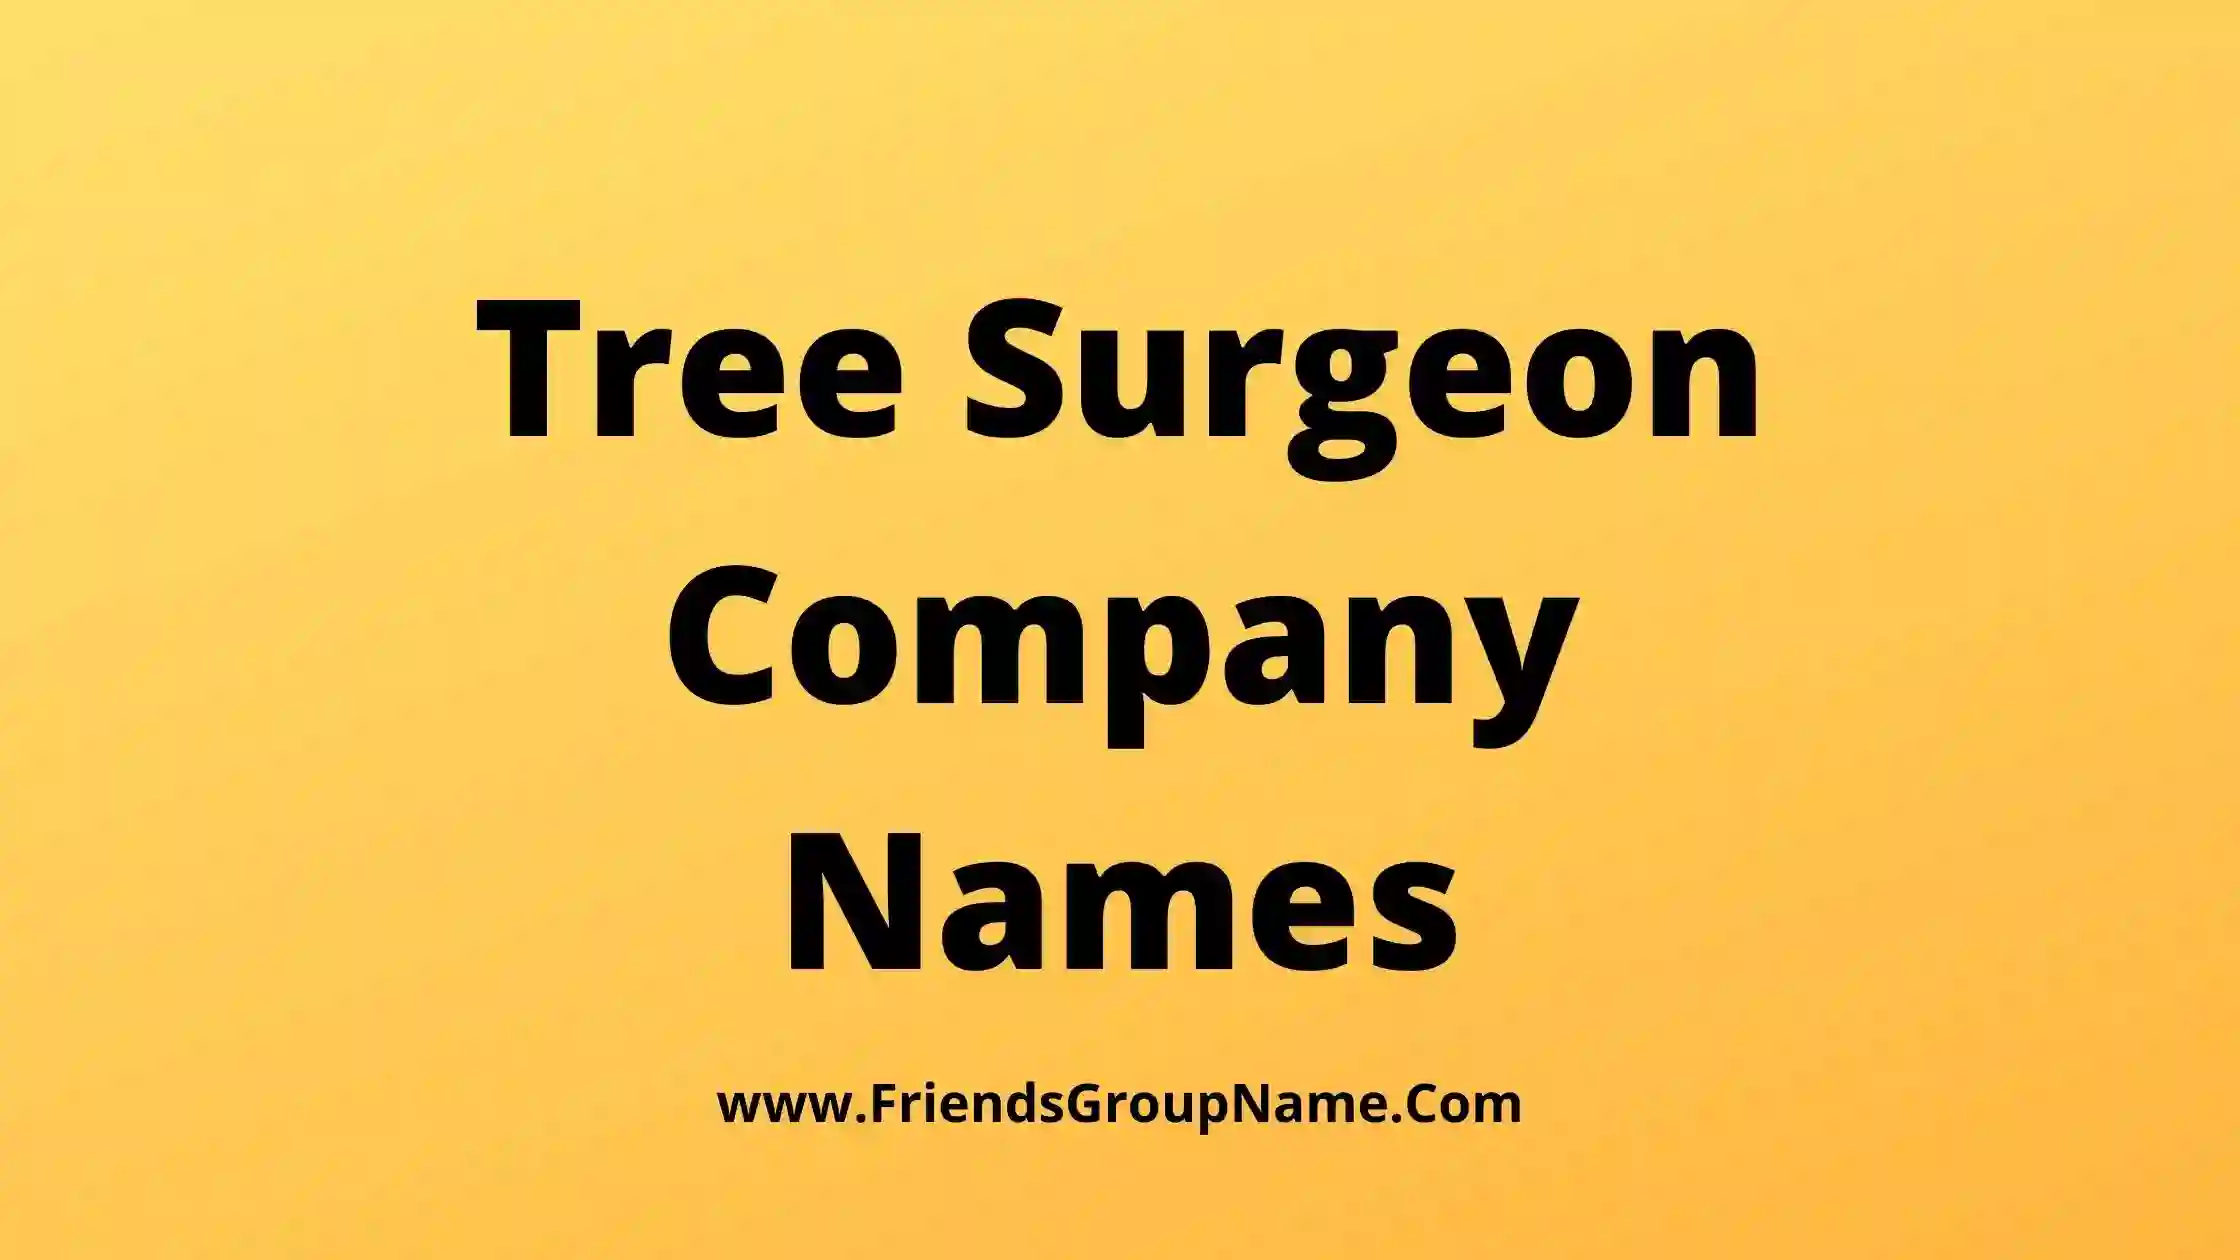 Tree Surgeon Company Names